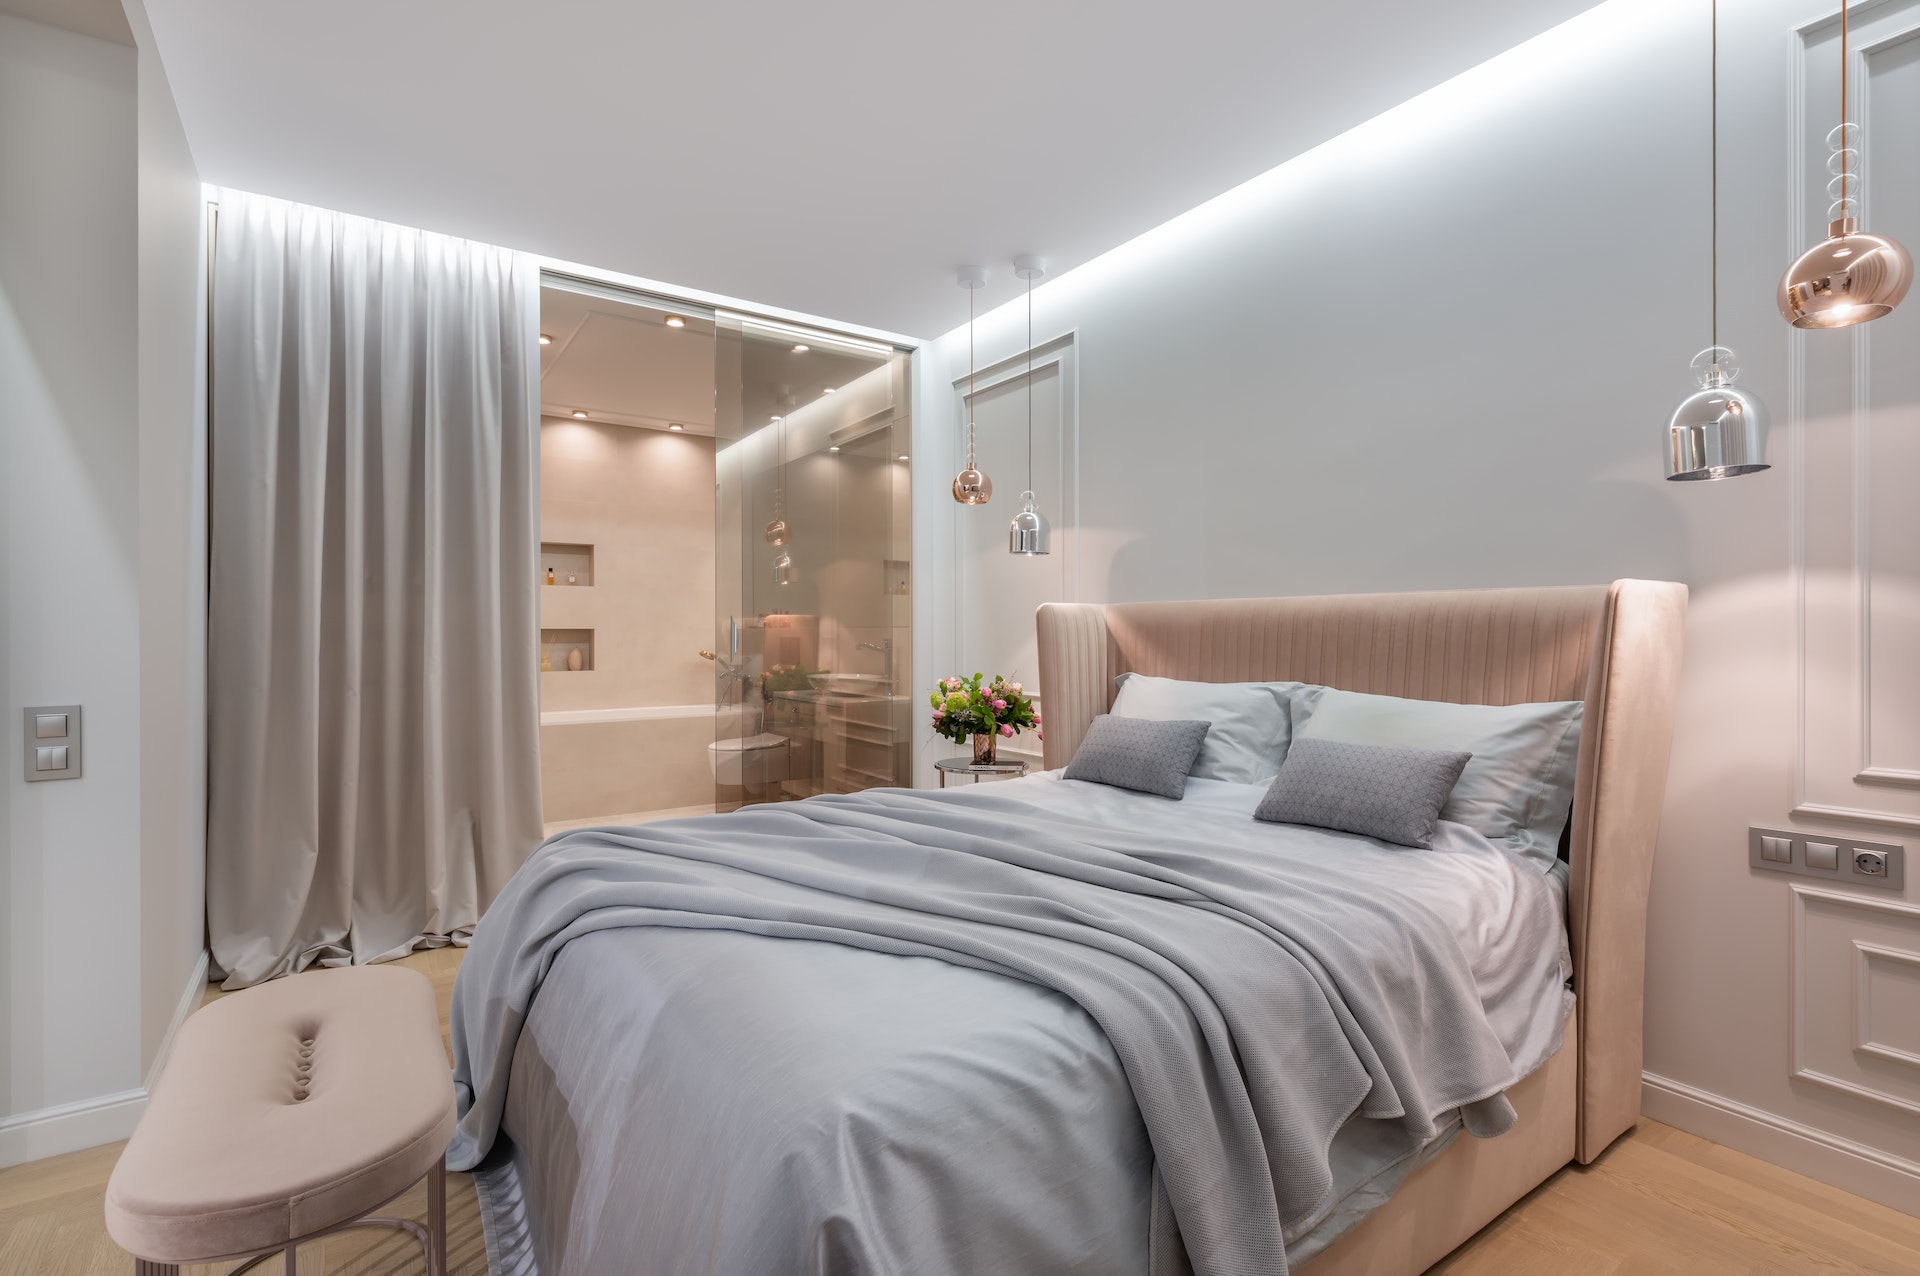 Design Bedroom Ideas